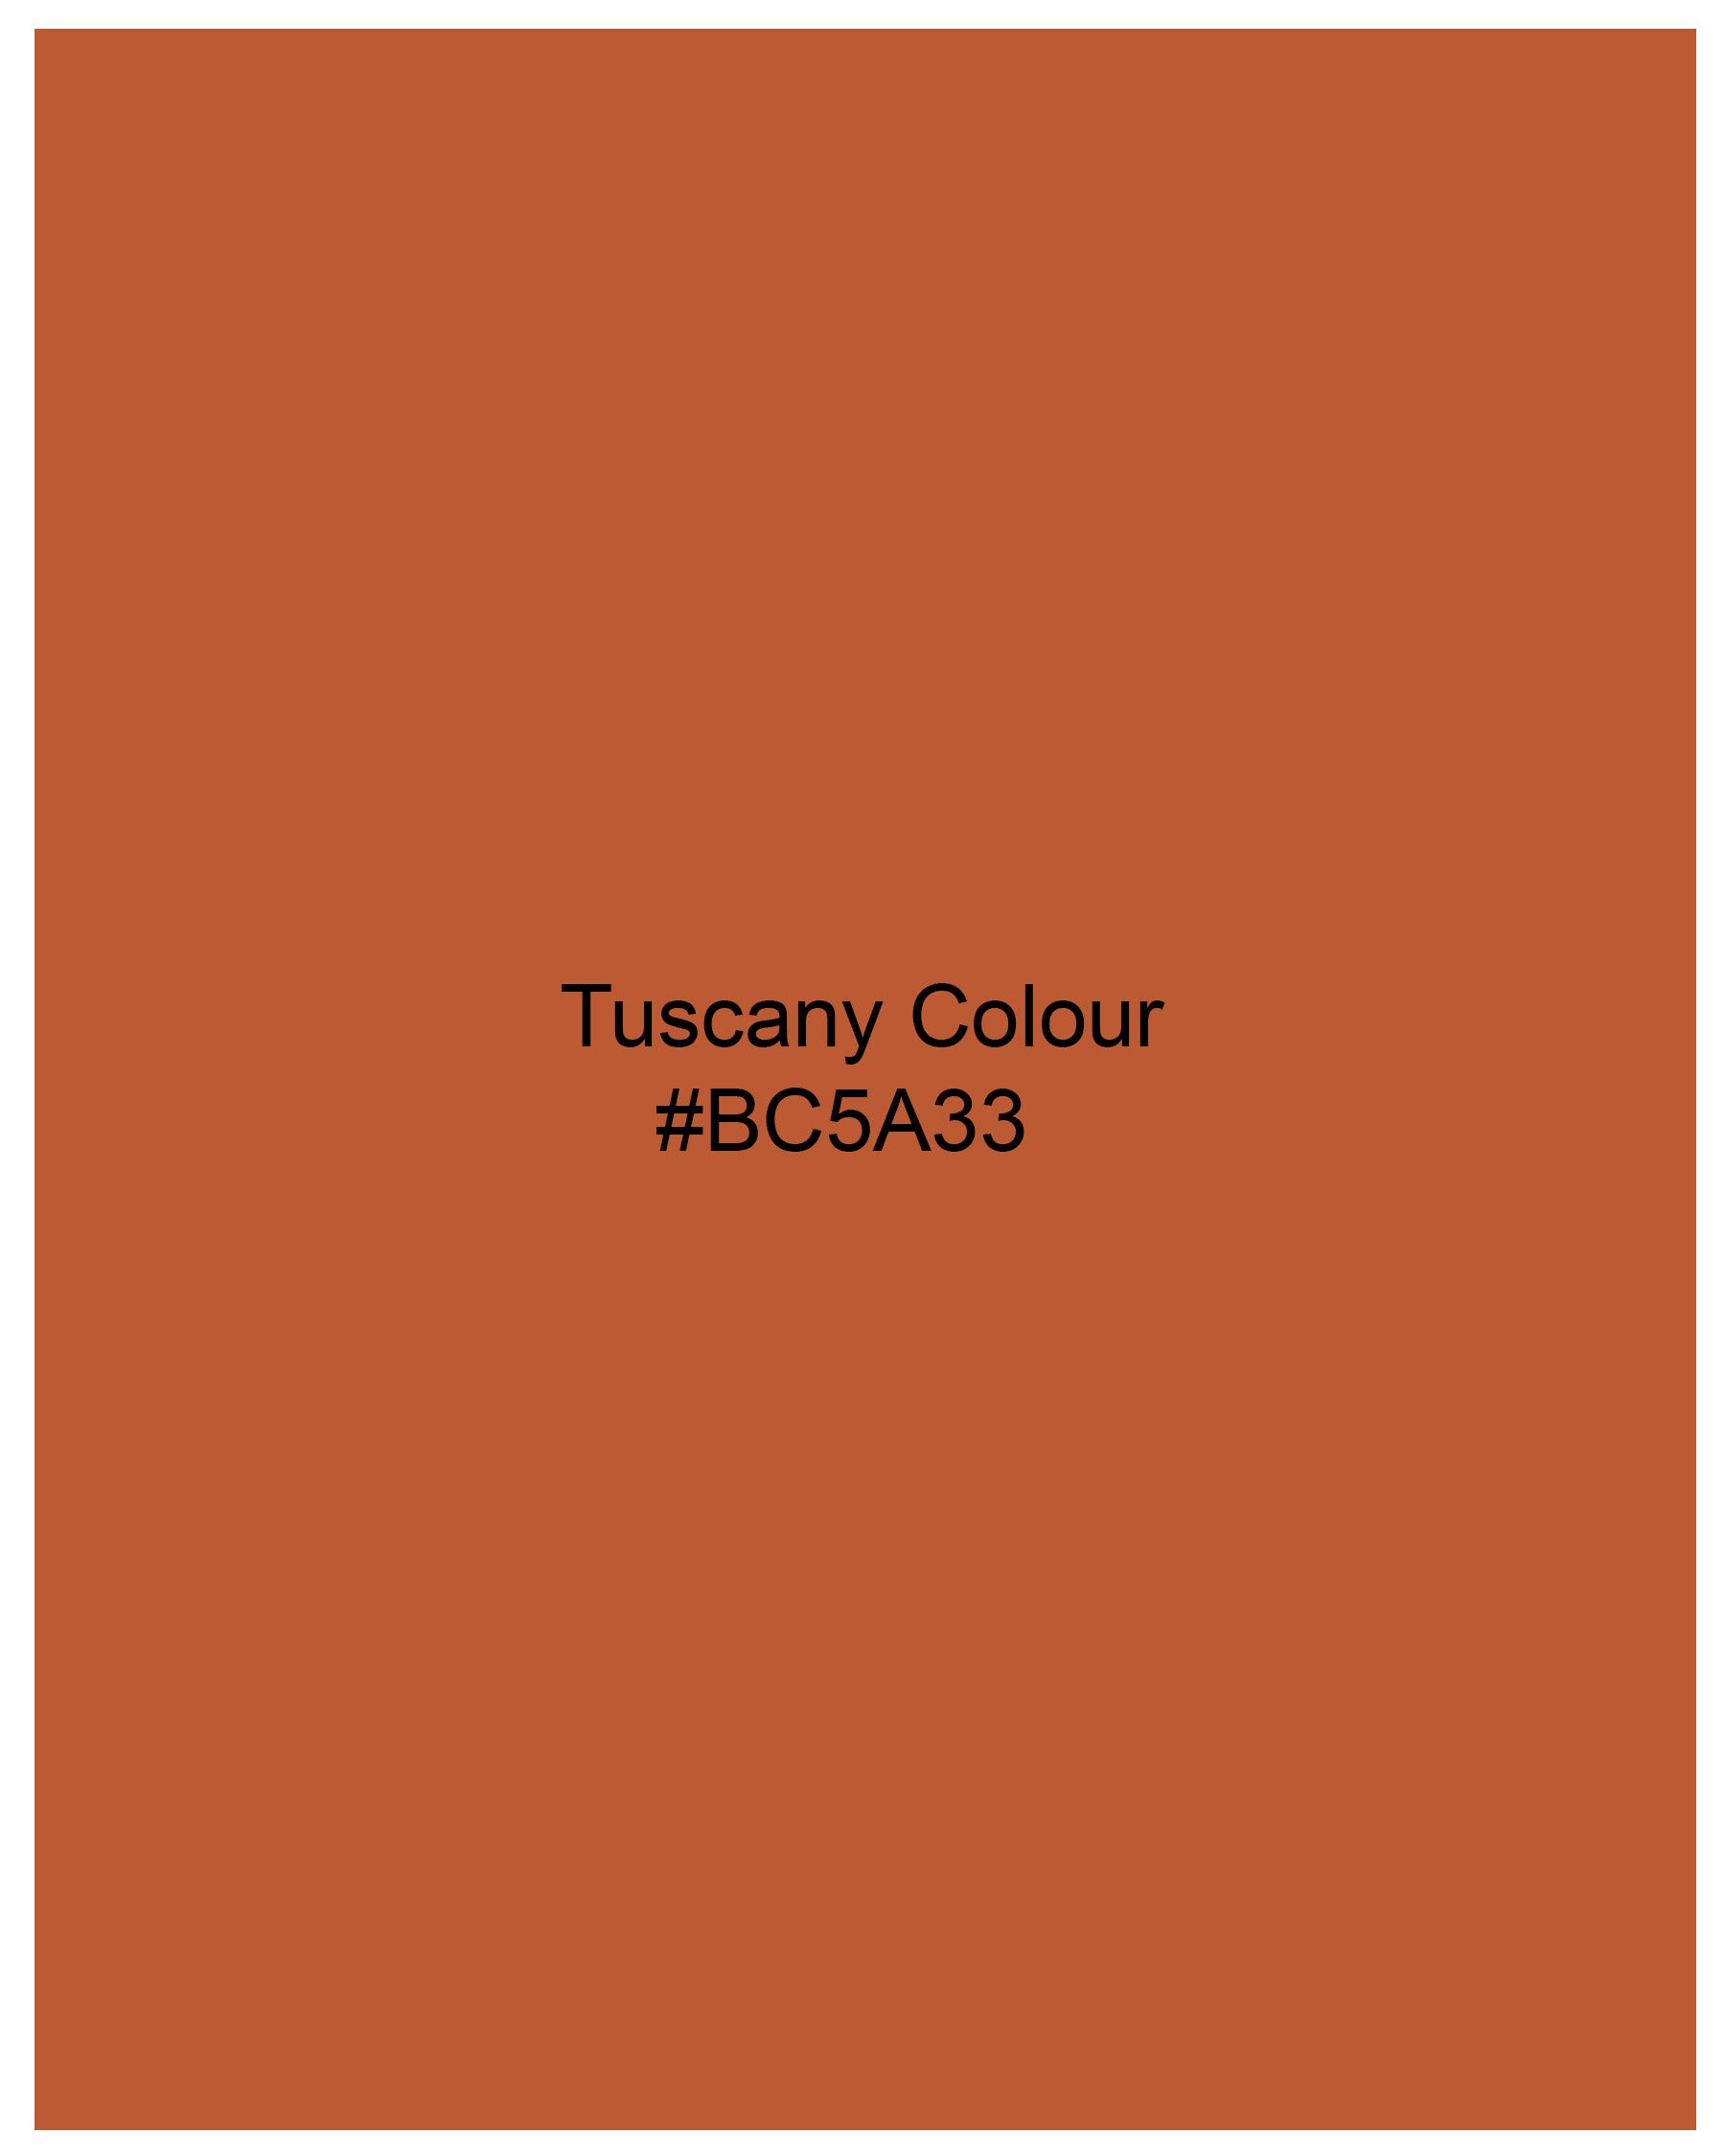 Tuscany Orange Luxurious Linen Bush Shirtvv 8289-P296 -38,8289-P296 -H-38,8289-P296 -39,8289-P296 -H-39,8289-P296 -40,8289-P296 -H-40,8289-P296 -42,8289-P296 -H-42,8289-P296 -44,8289-P296 -H-44,8289-P296 -46,8289-P296 -H-46,8289-P296 -48,8289-P296 -H-48,8289-P296 -50,8289-P296 -H-50,8289-P296 -52,8289-P296 -H-52